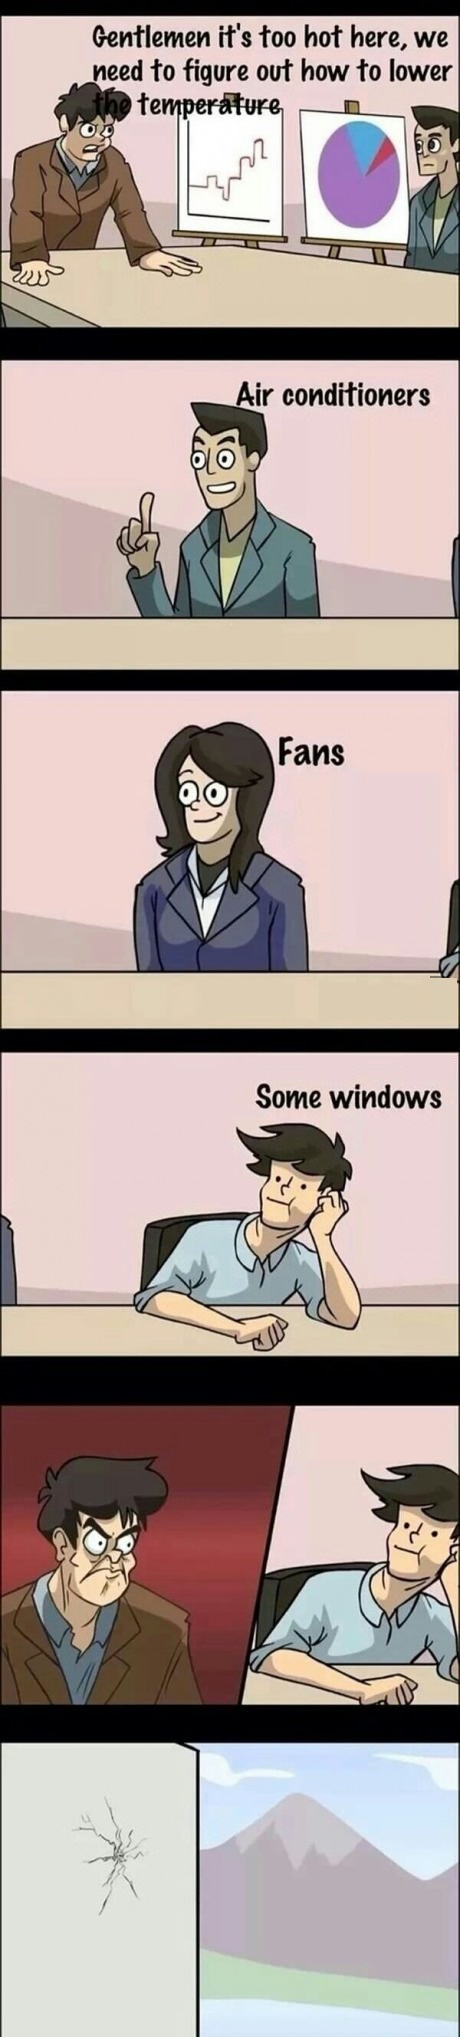 funny-picture-hot-no-windows-comics